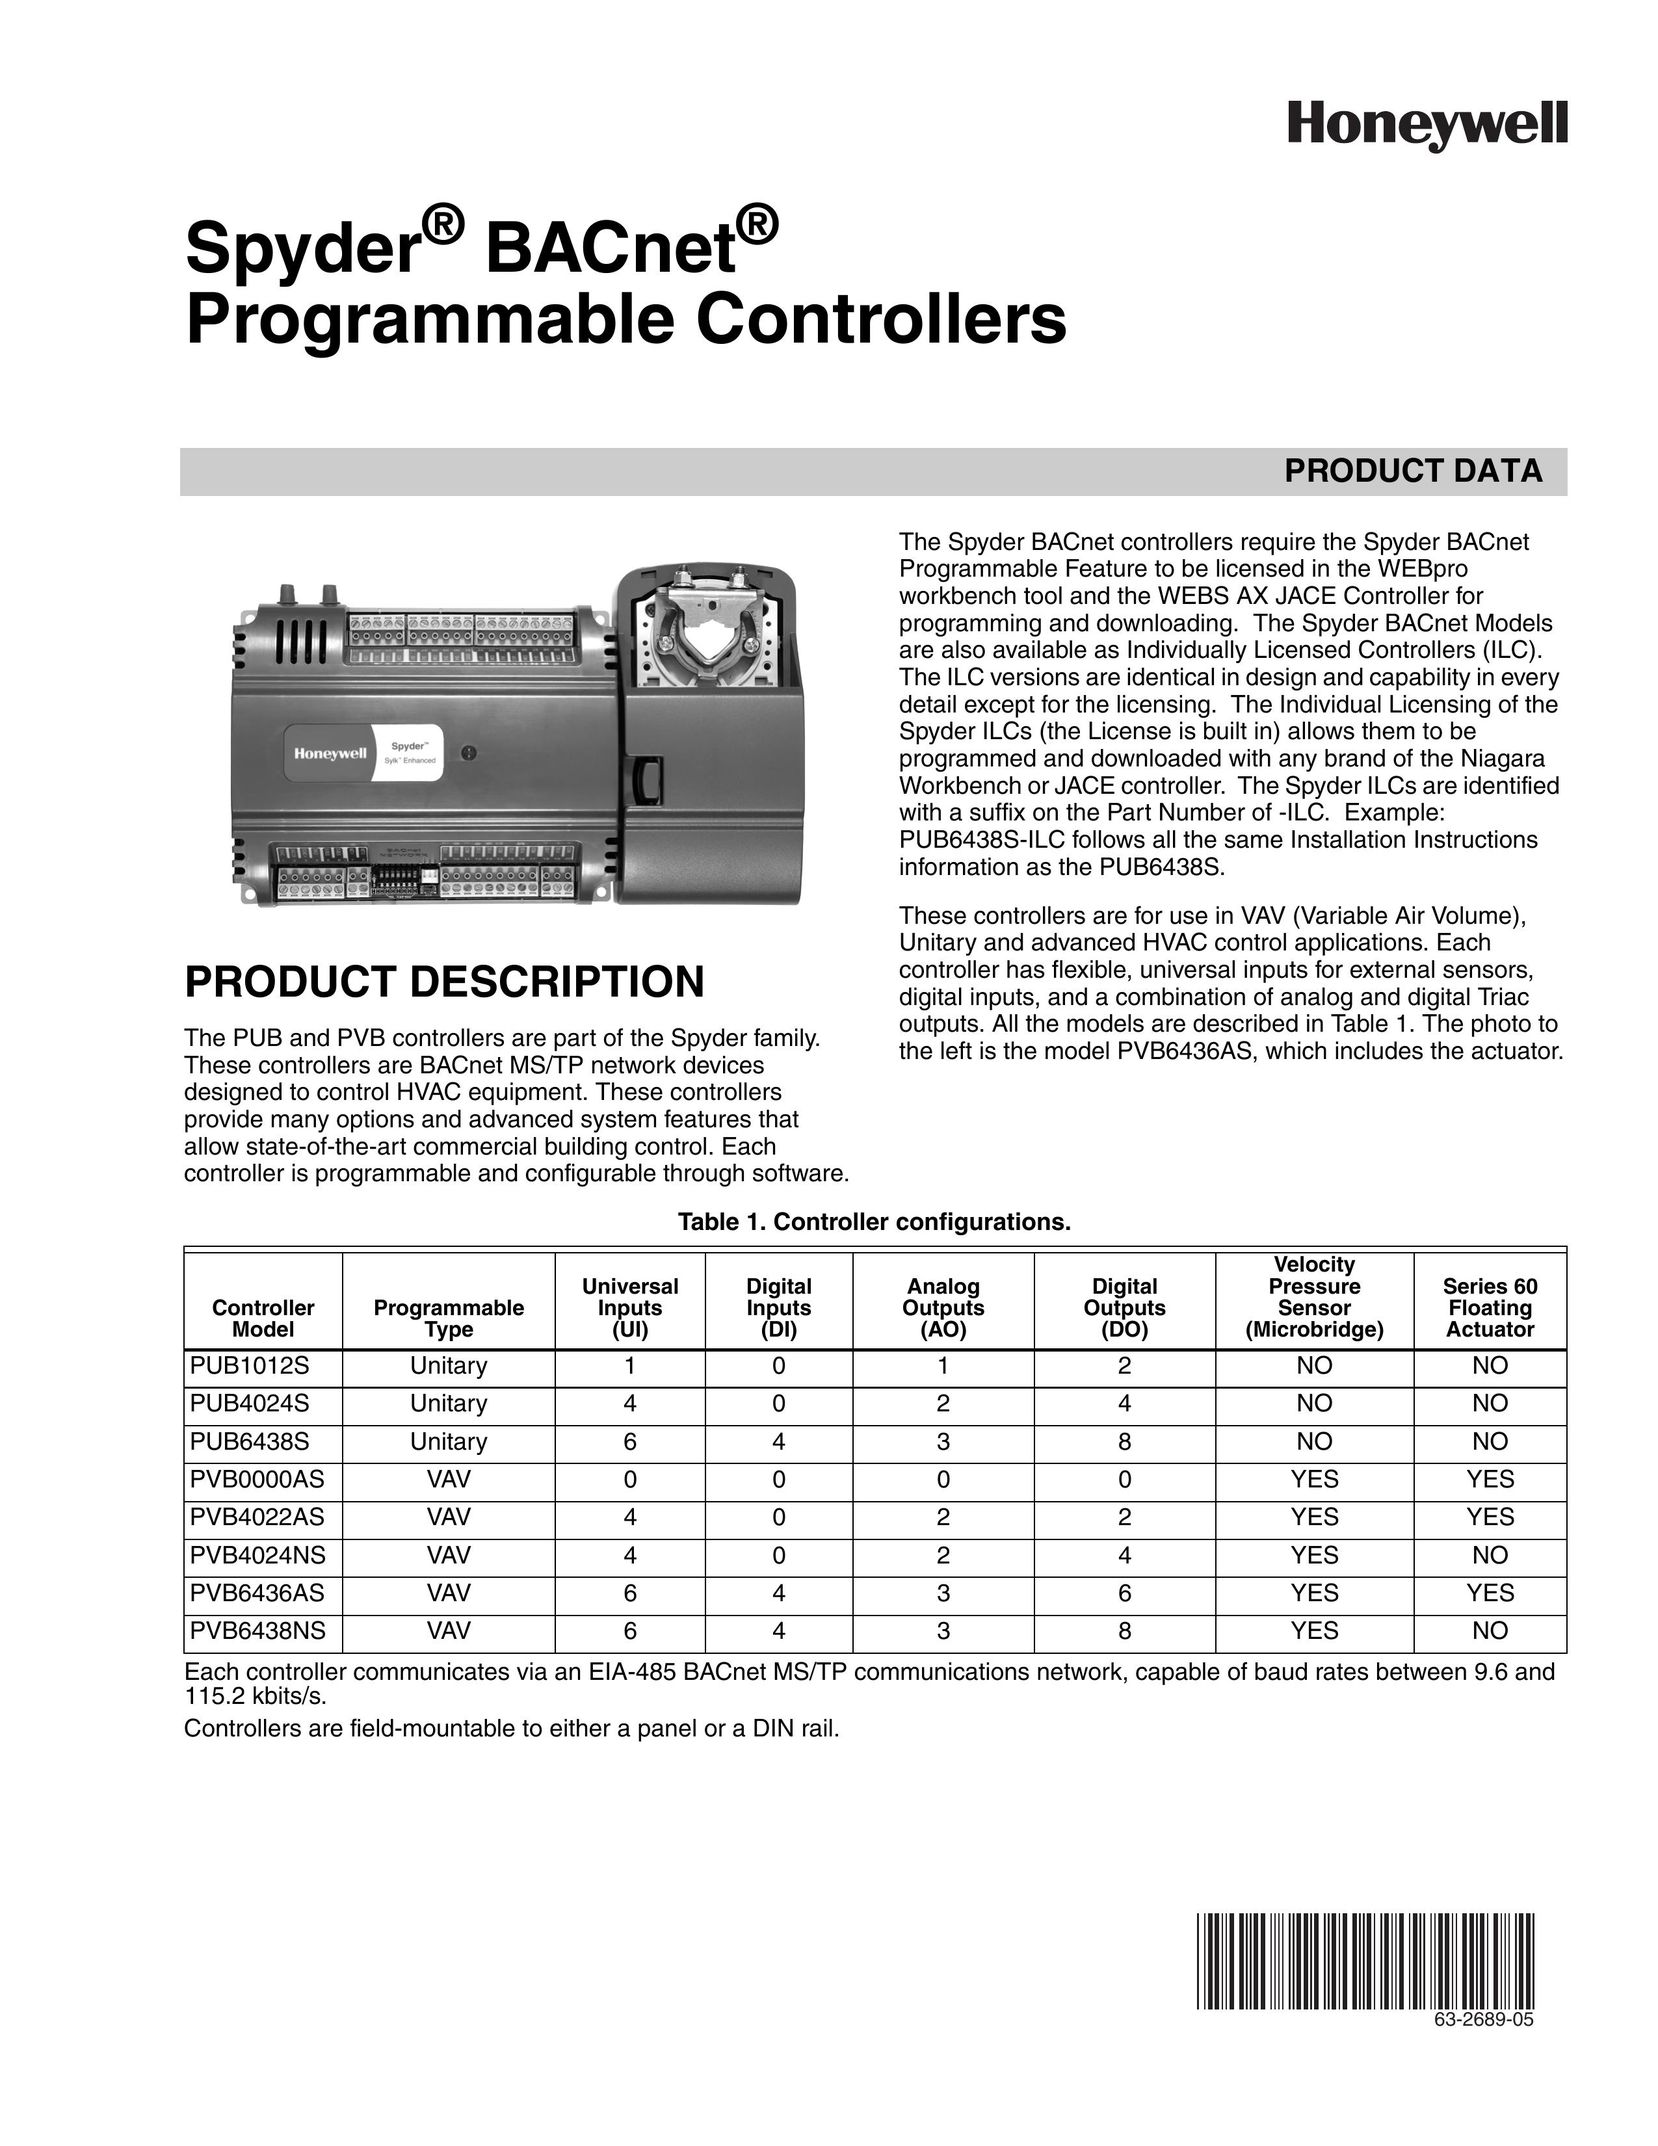 Honeywell PVB0000AS Universal Remote User Manual